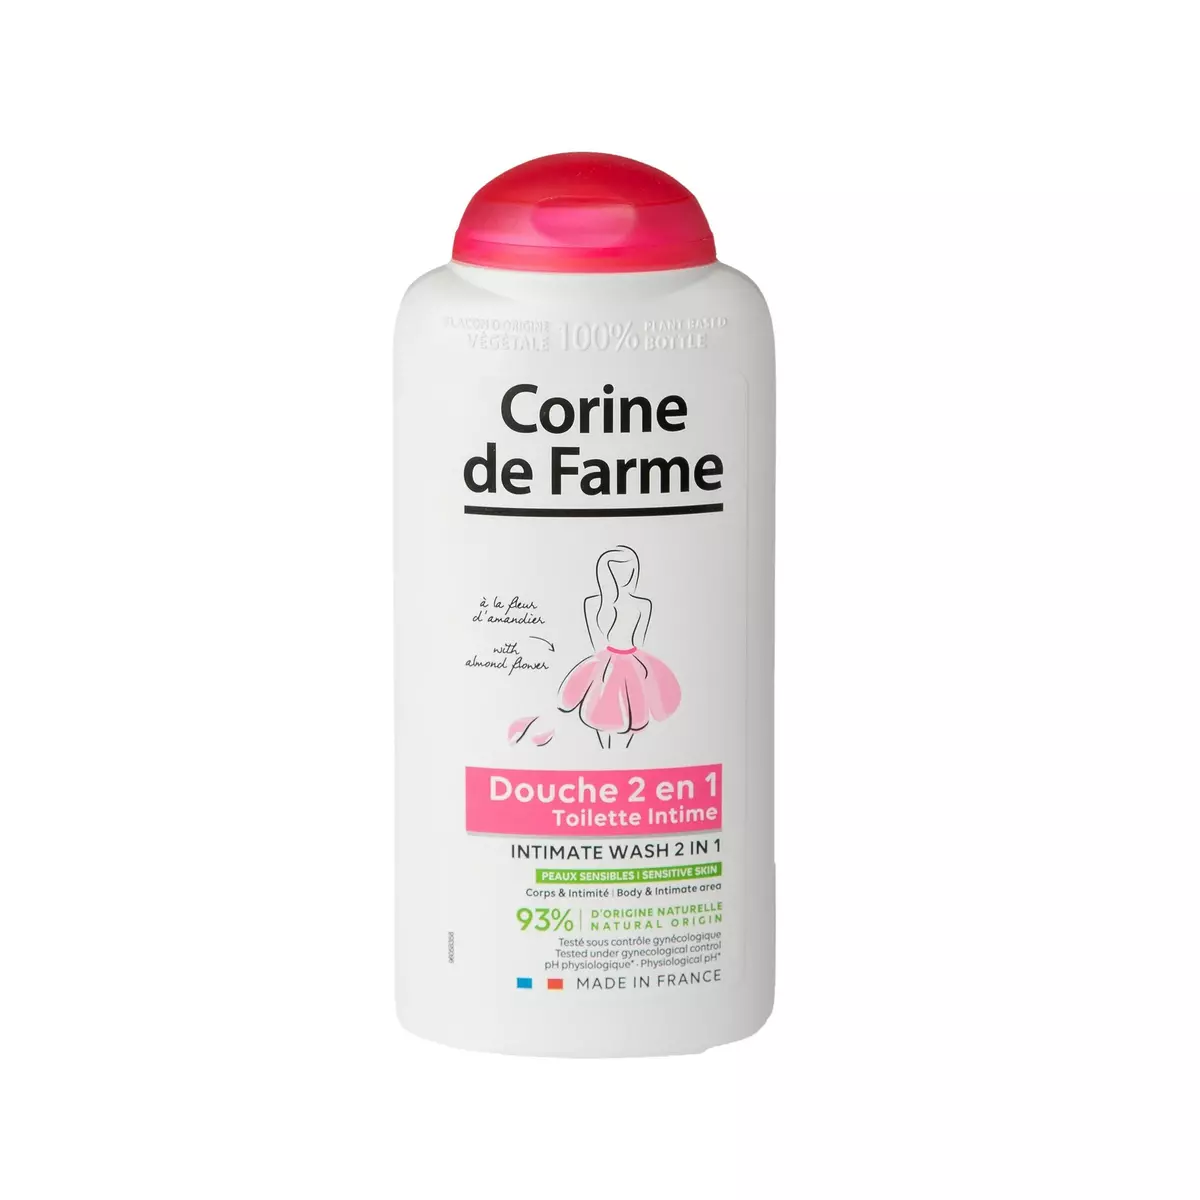 CORINE DE FARME GEL DOUCHE INTIME 2 EN 1 CORPS & INTIMITE 250ml